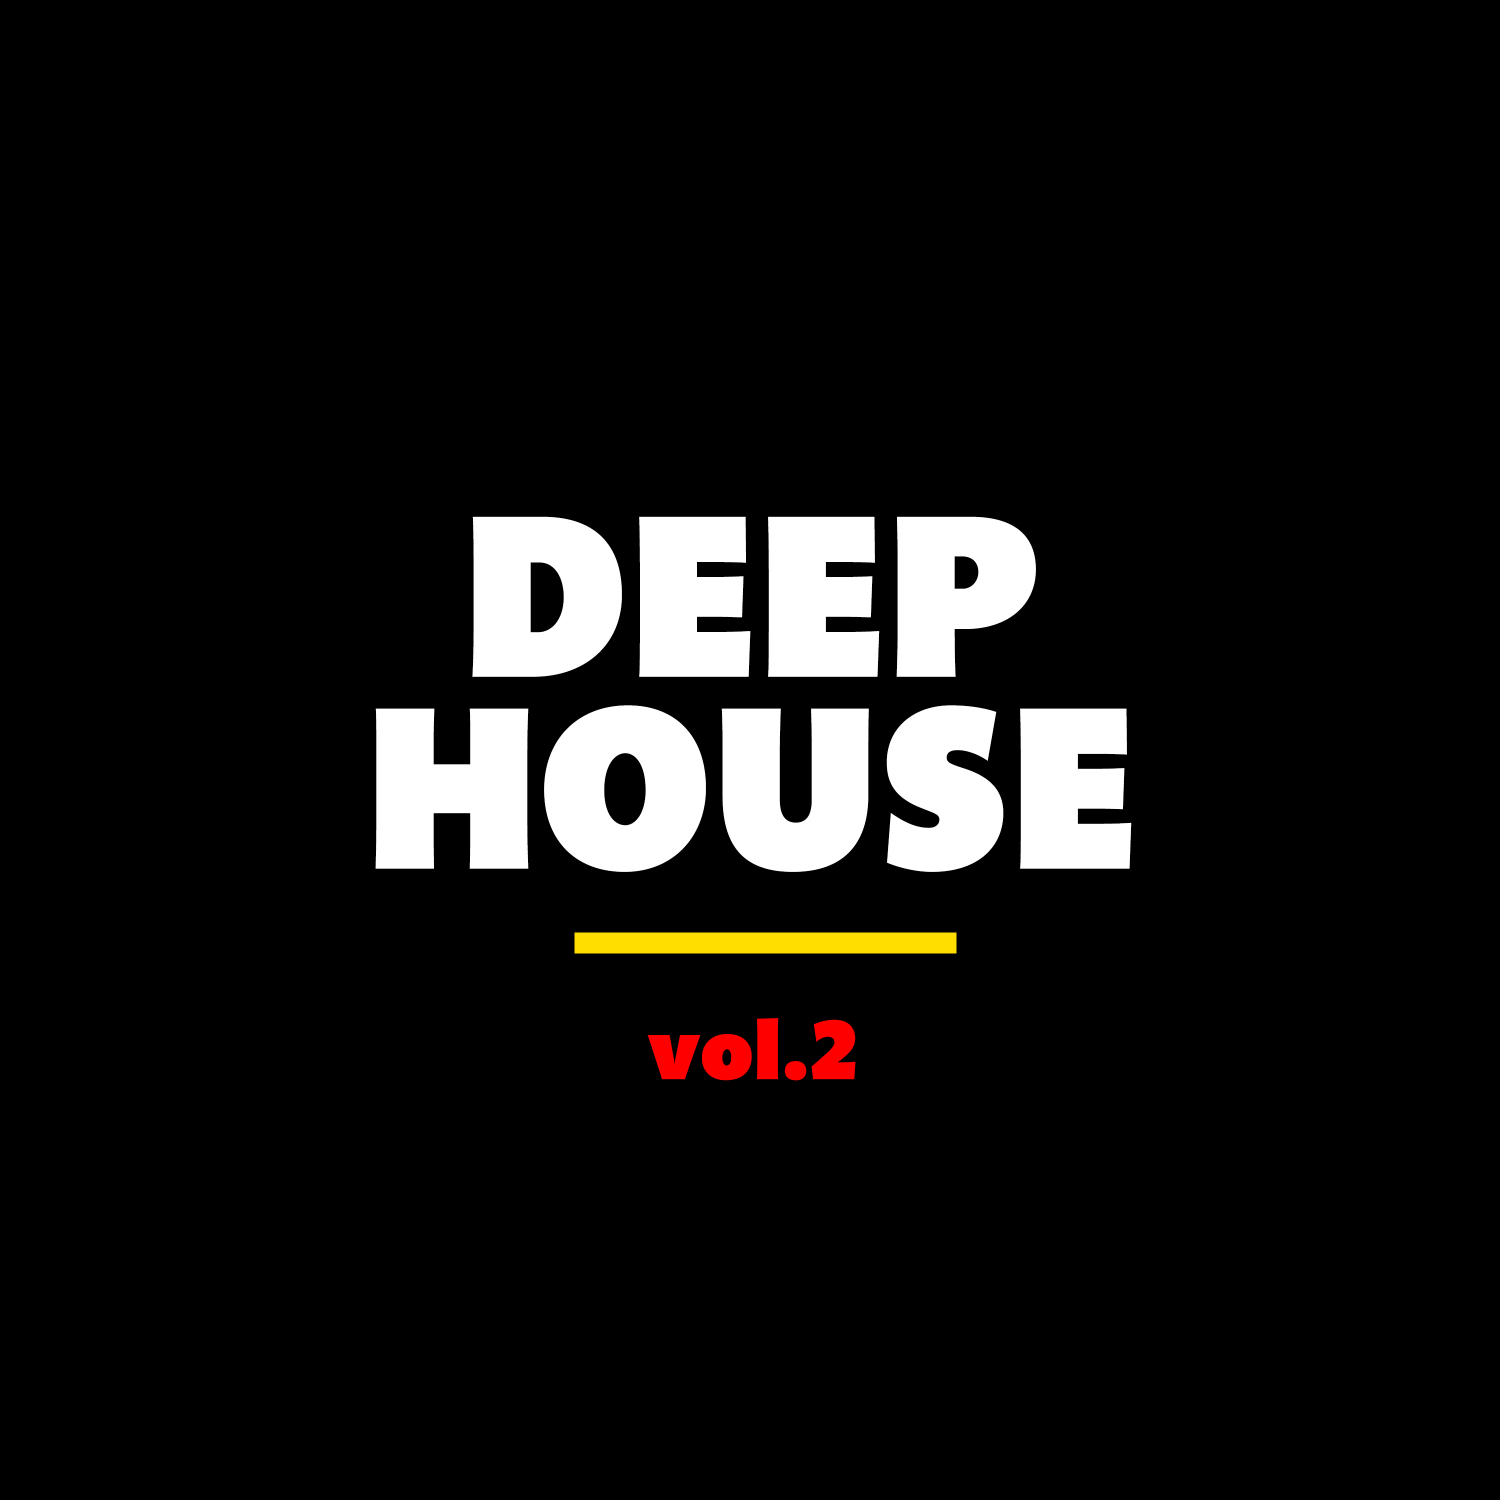 Дееп хаус вк. Логотип Deep House. Deep House надпись. Дип Хаус аватарка. Надпись хауса.